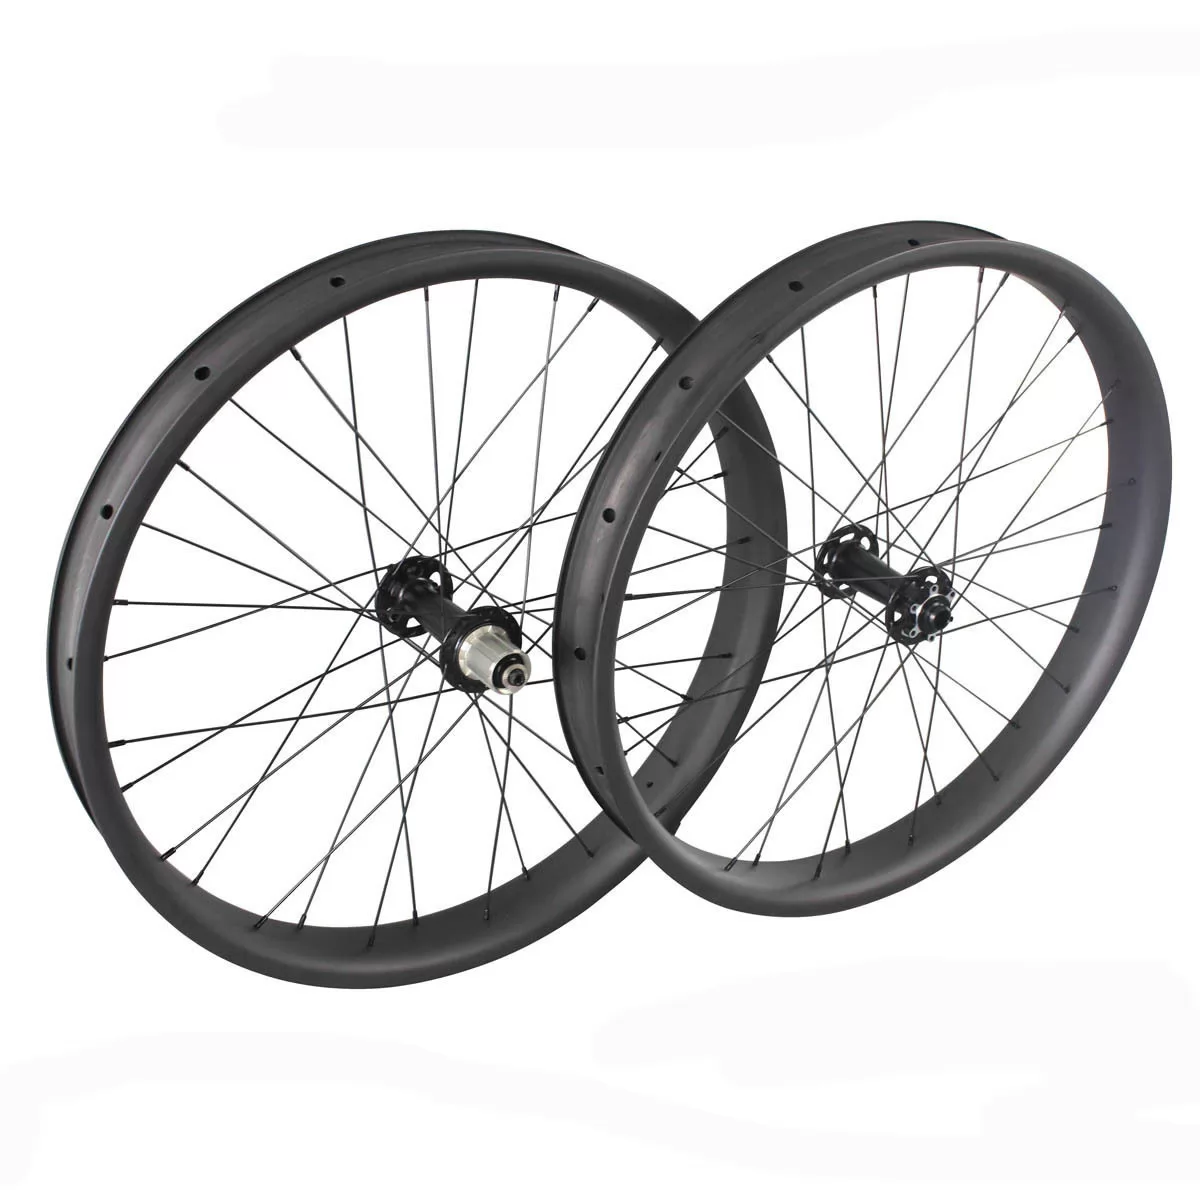 |CW26-65CT| 26er carbon wheels fat bike 65mm width 25mm deep clincher tubeless compatible complete wheelset snow/sand ride cyclingwheel online sales